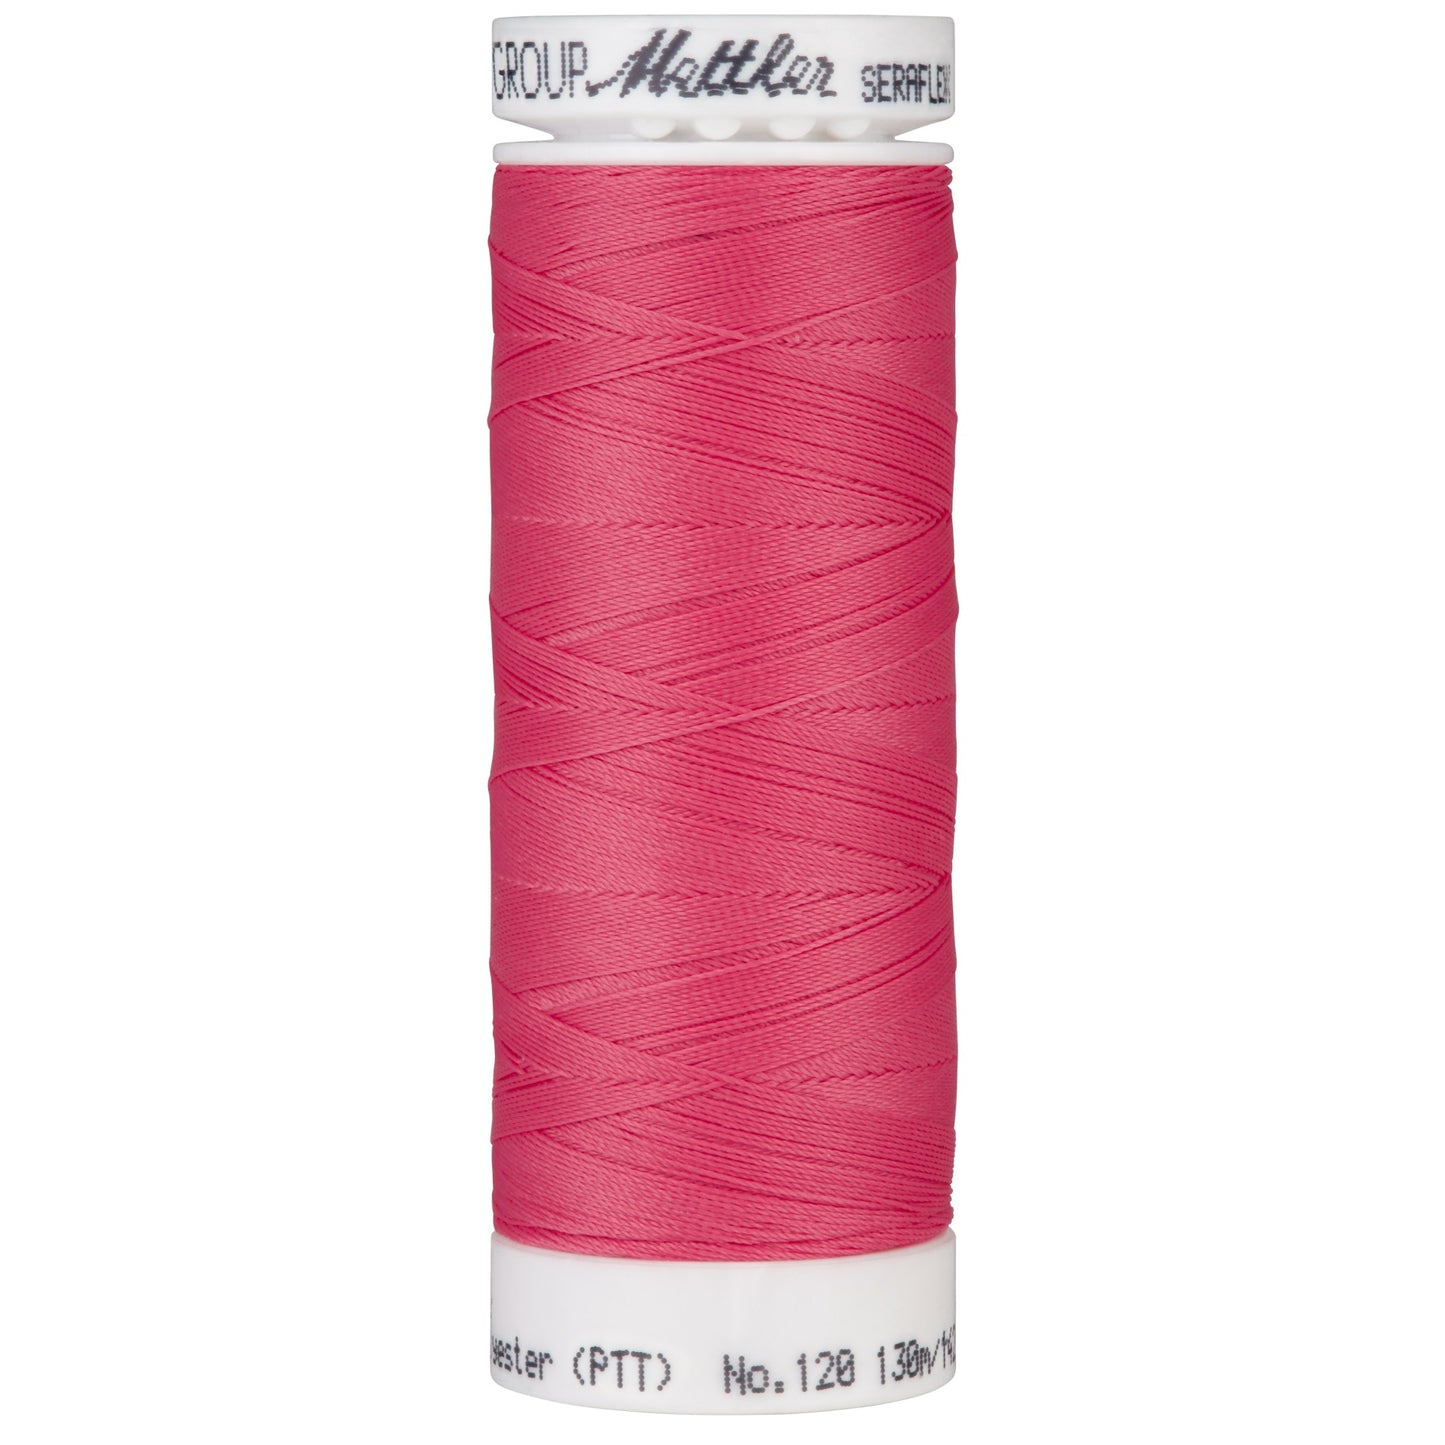 Seraflex - Mettler - Stretch Thread - For Stretchy Seams - 130 Meters - Garden Rose